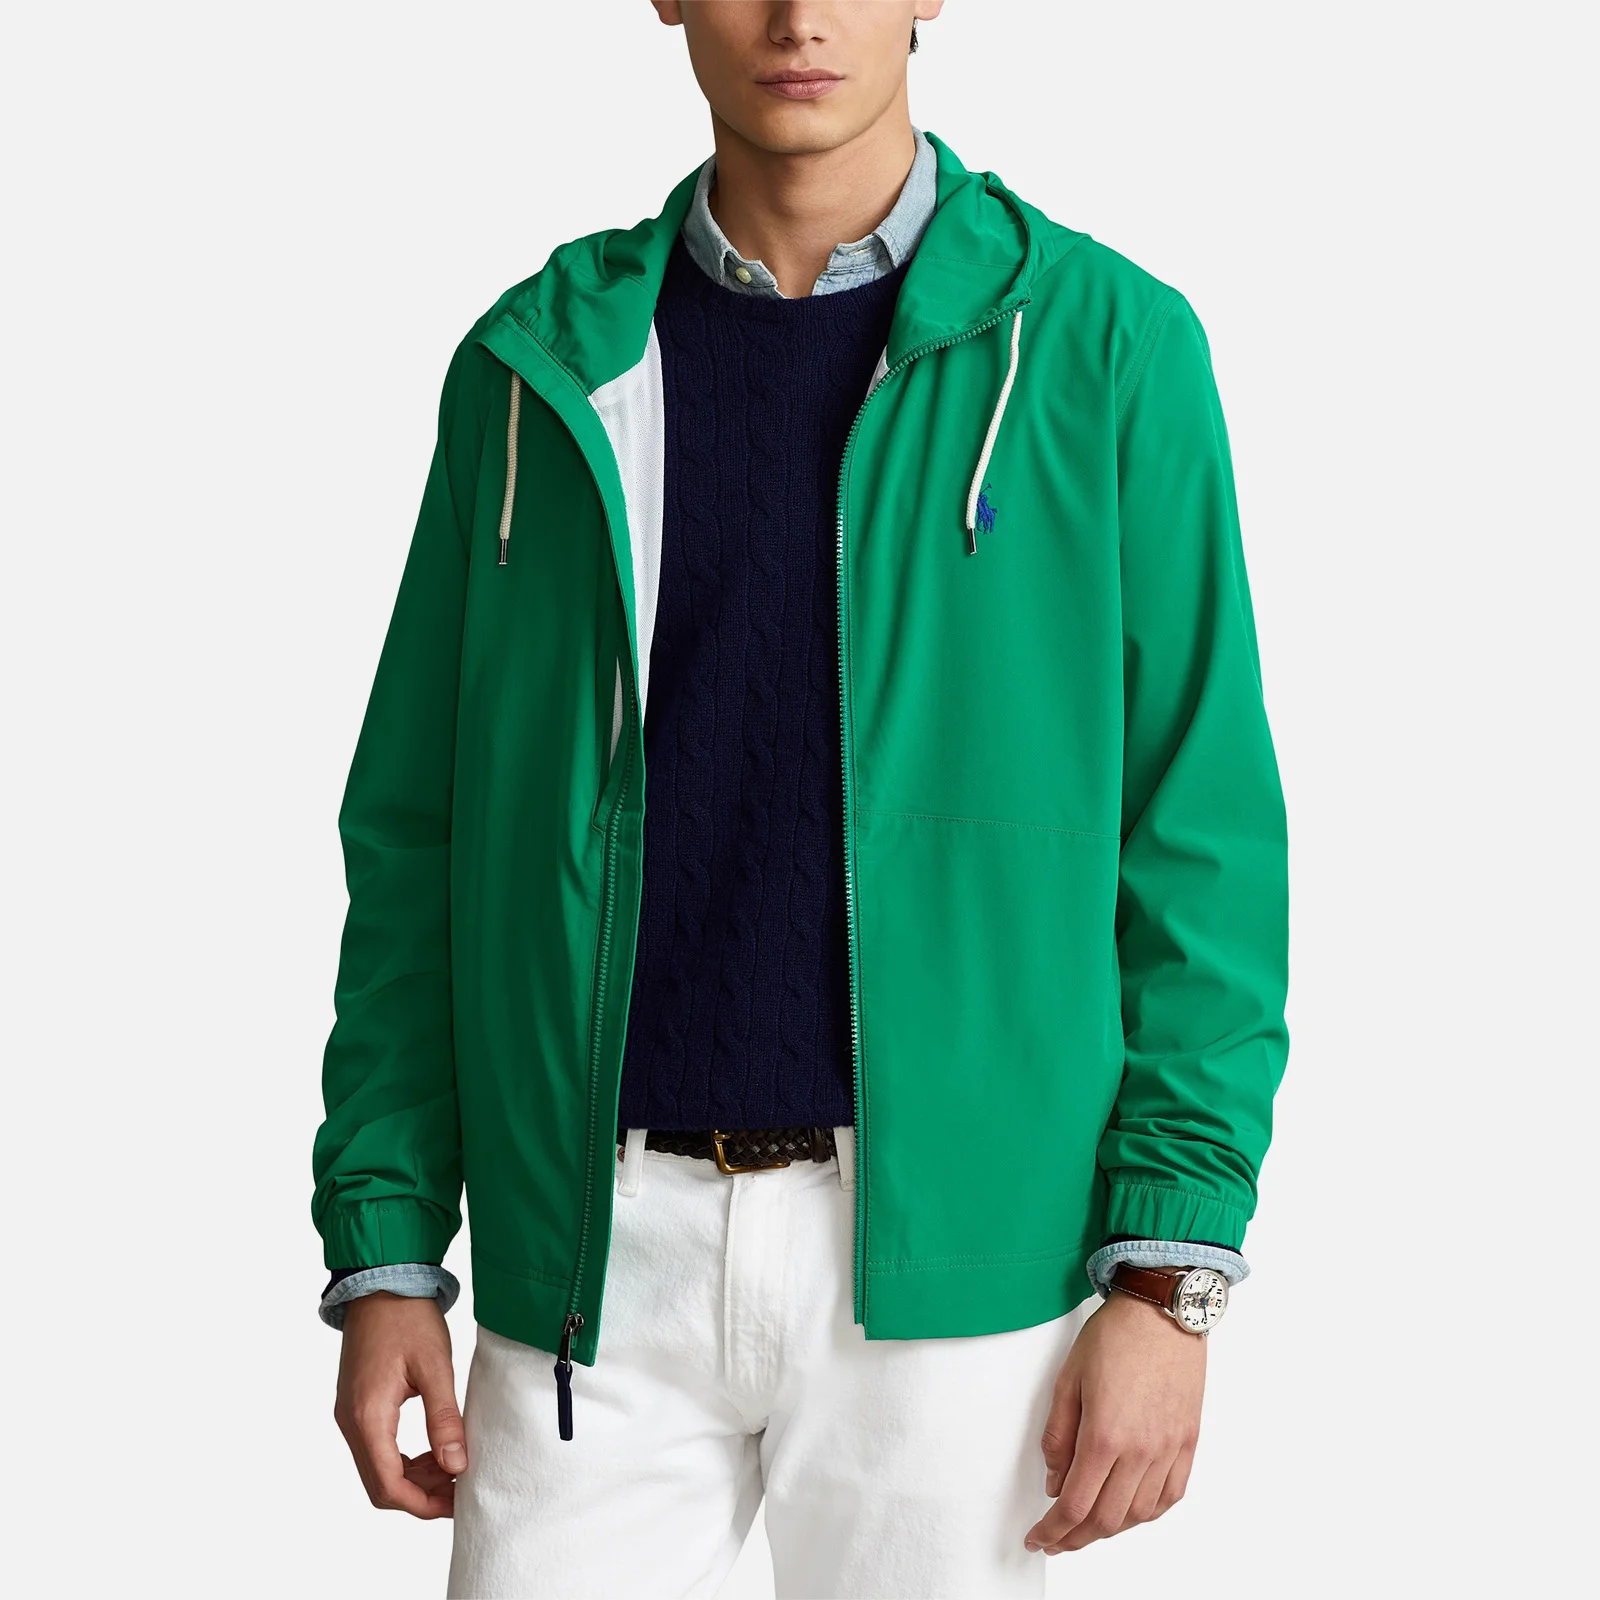 Polo Ralph Lauren Men's Packable Hooded Jacket - Cruise Green Image 1